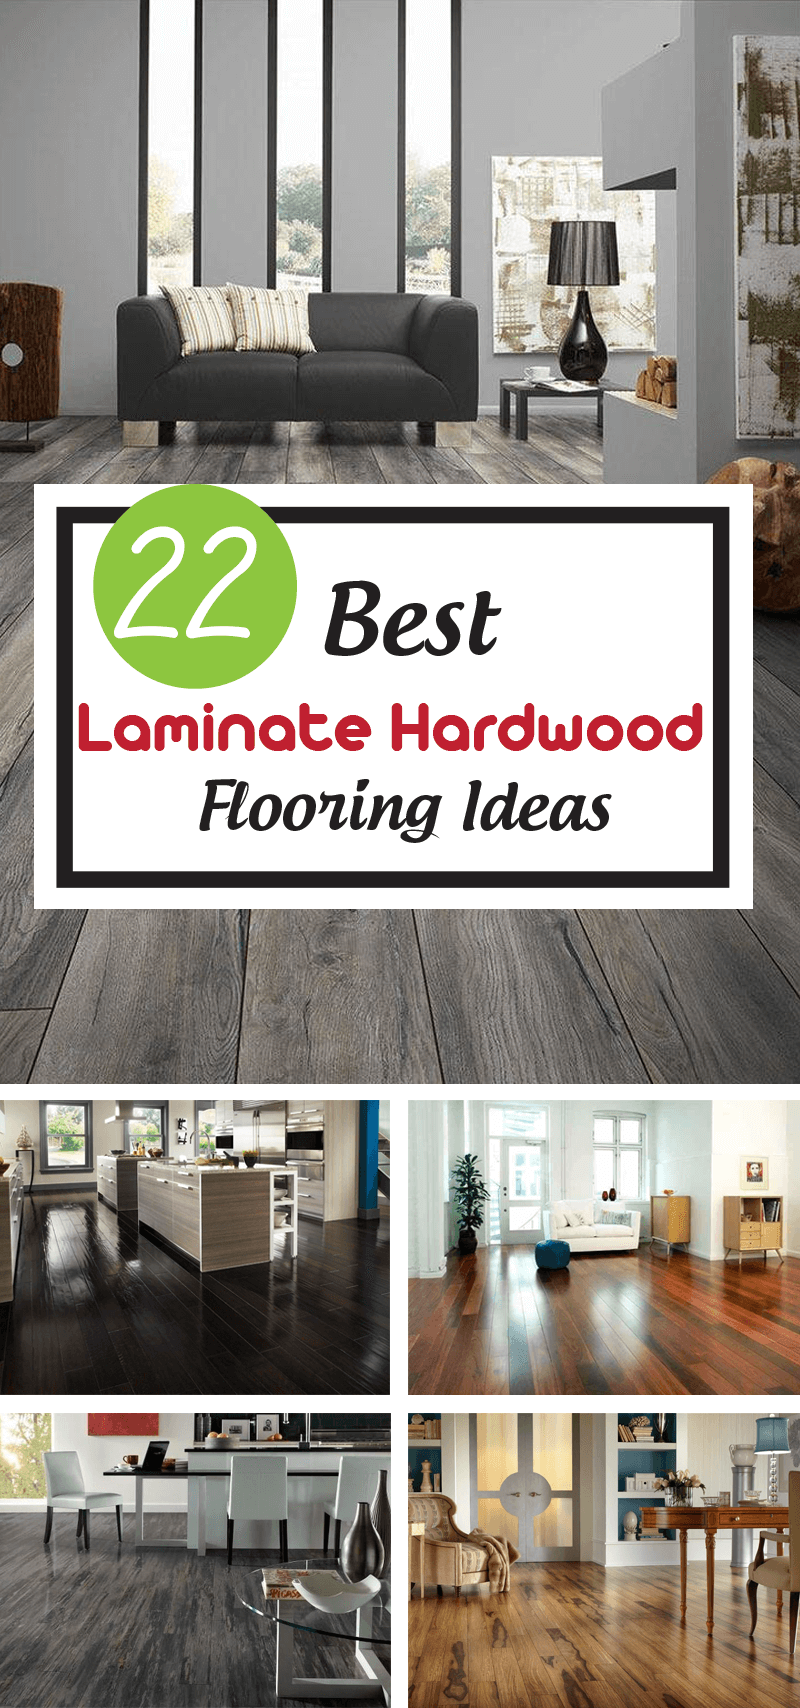 Best Laminate Hardwood Flooring Ideas